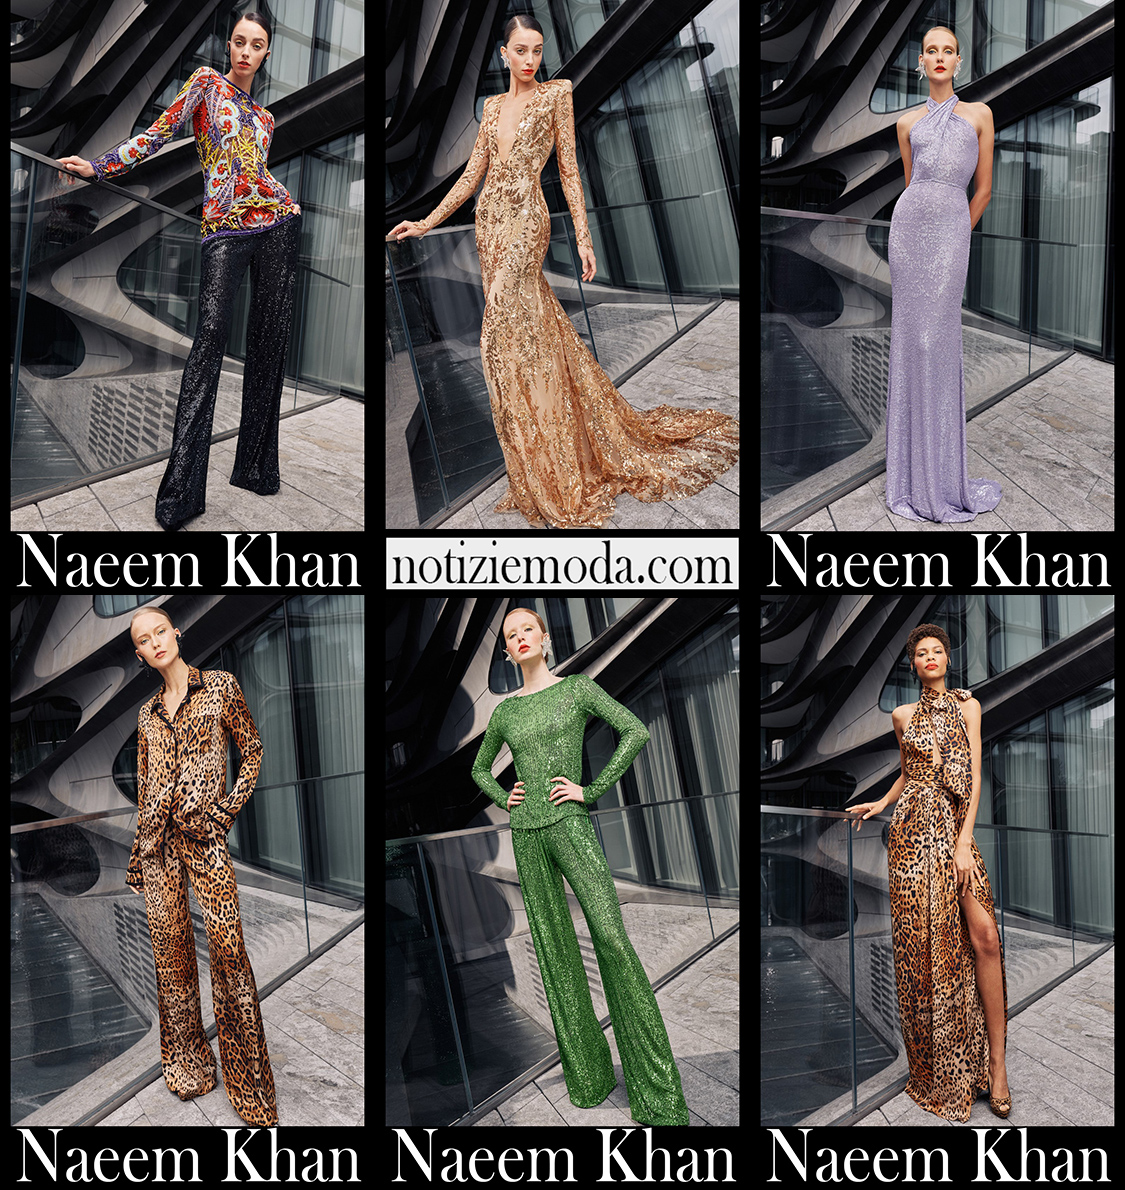 Collezione Naeem Khan primavera estate 2021 donna